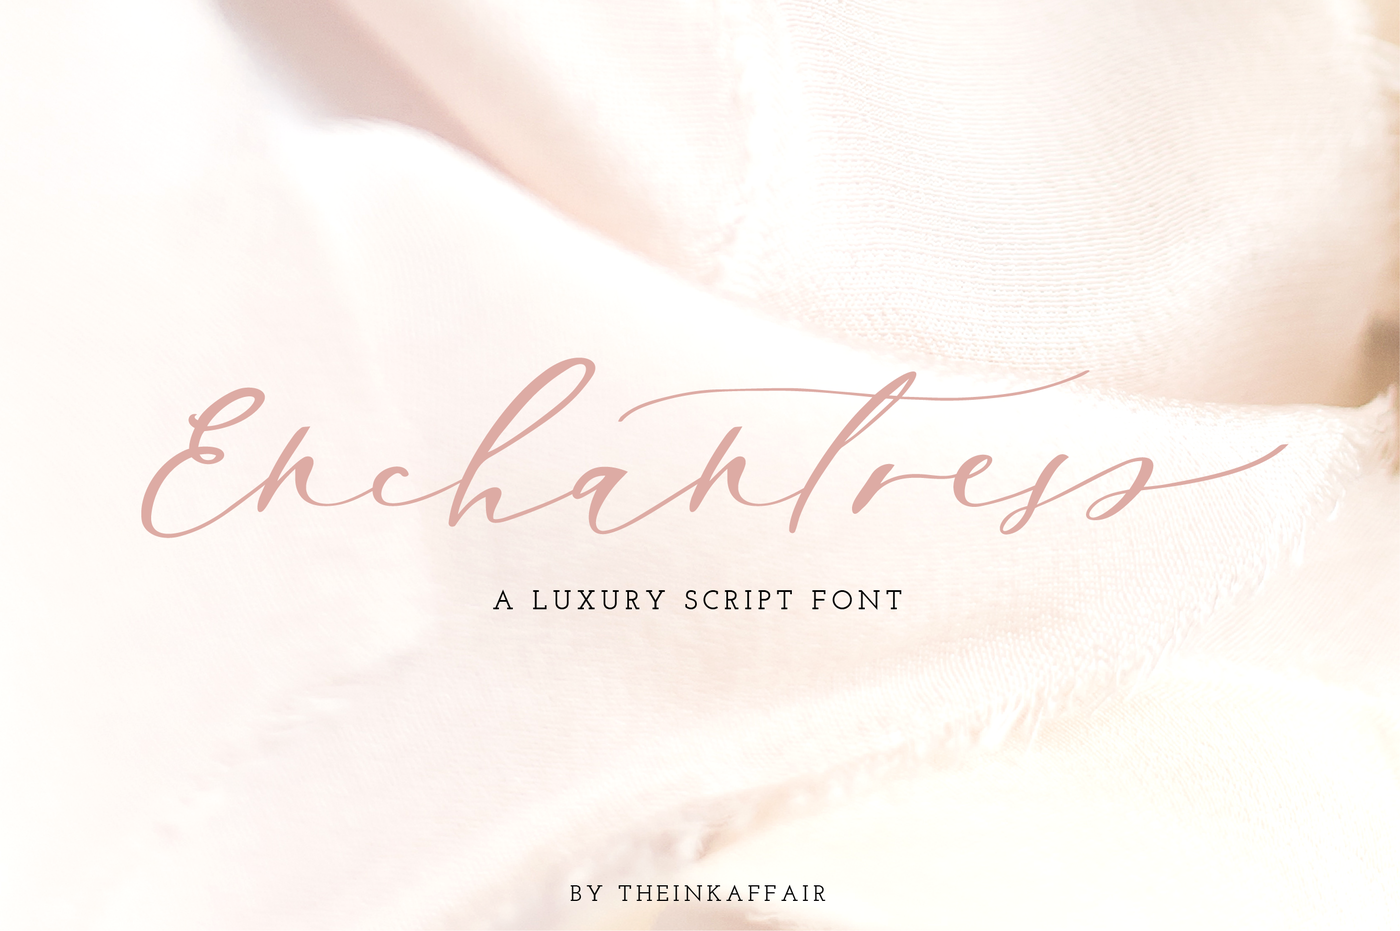 Enchantress Luxury Script Font By The Ink Affair Thehungryjpeg Com